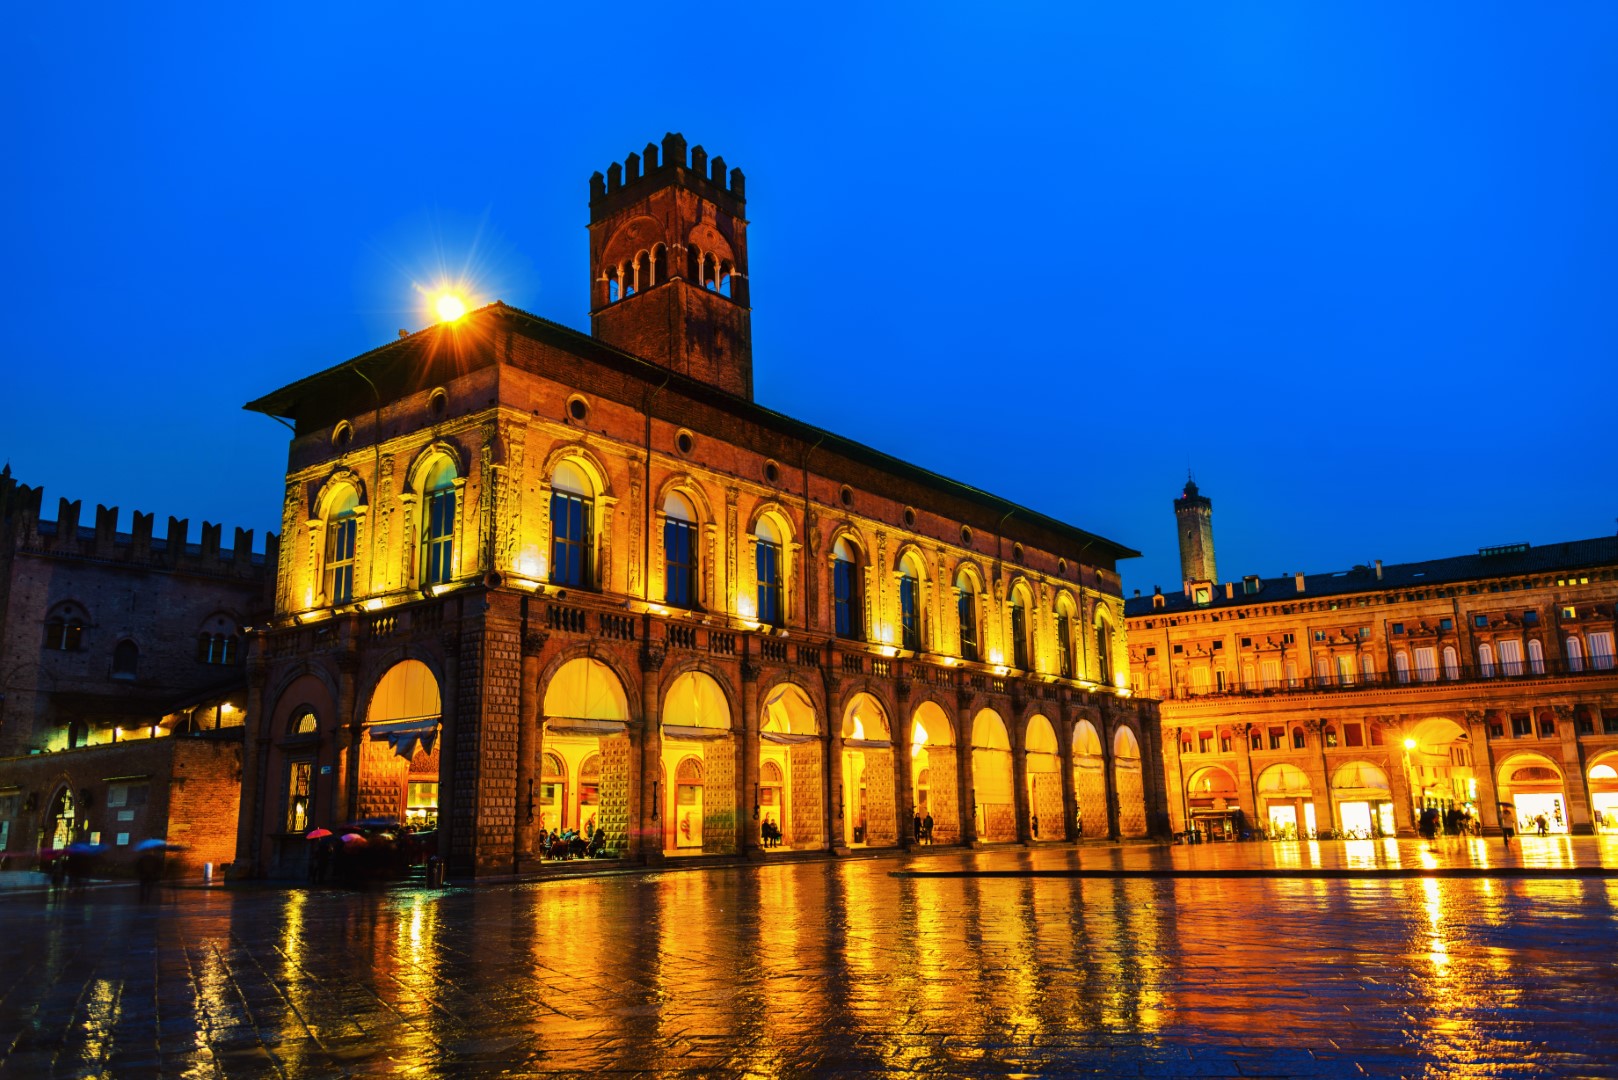 Bologna, Italy. King Enzo palace at the main square of Bologna, Italy. Famous landmark at sunset at night.